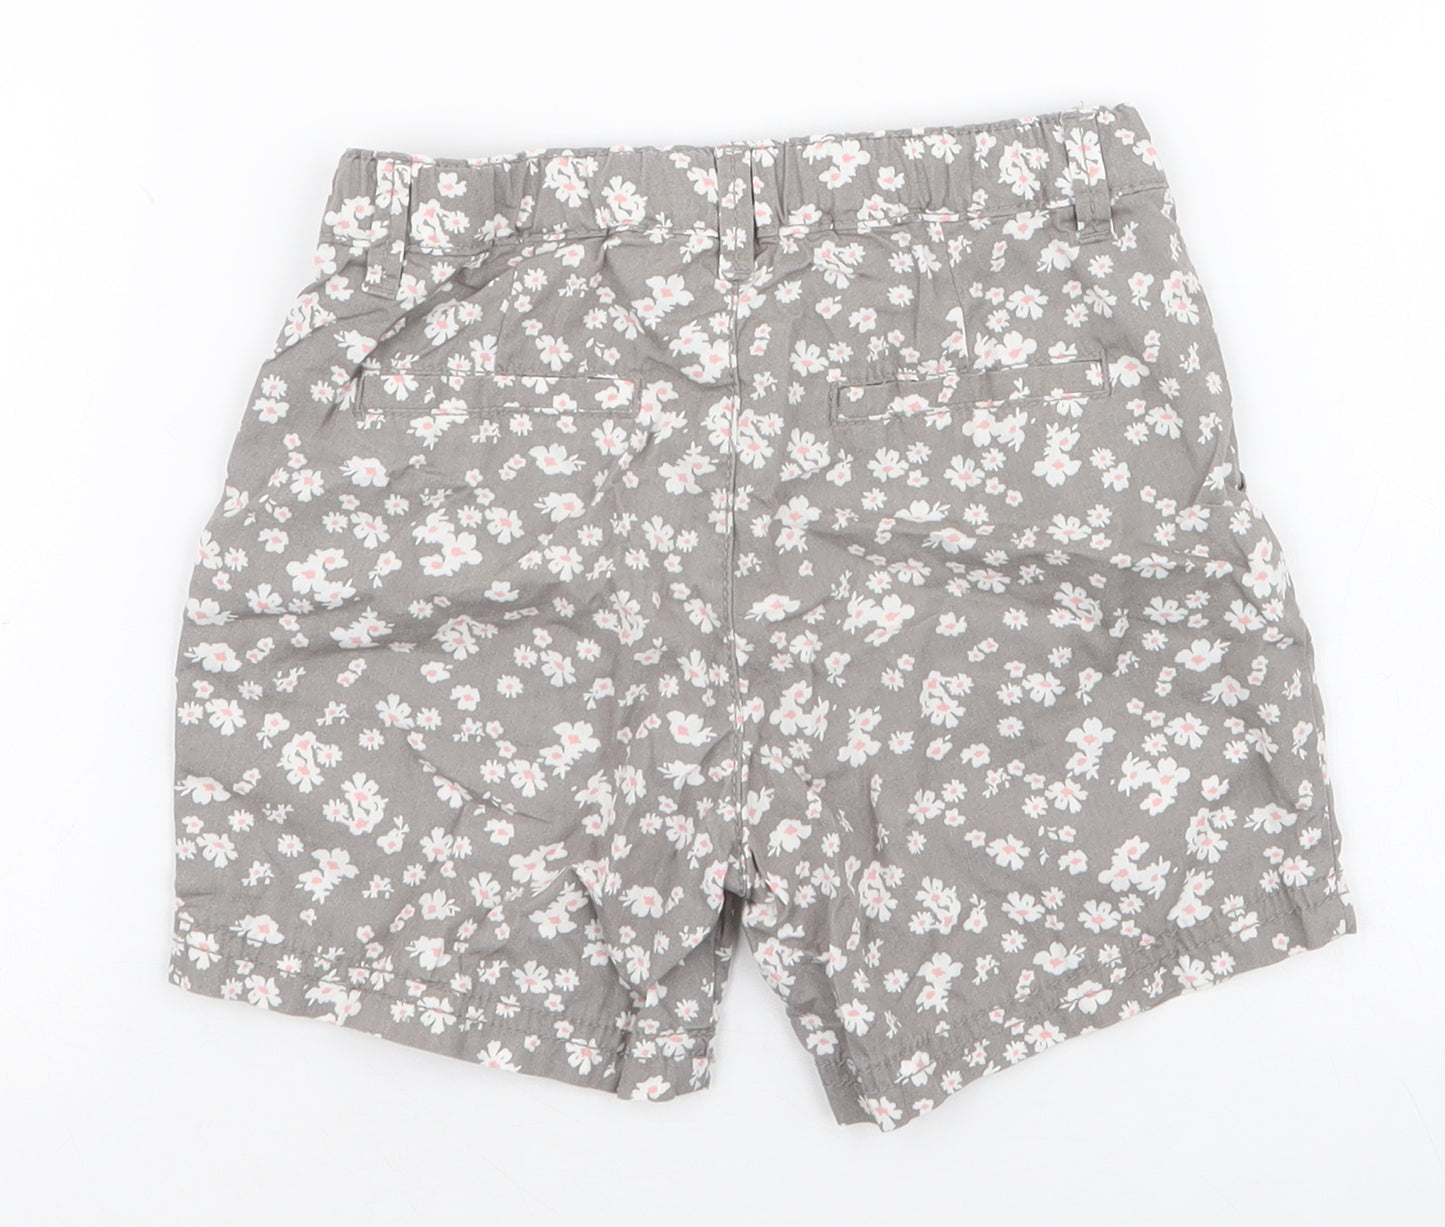 H&M Girls Grey Floral 100% Cotton Chino Shorts Size 4-5 Years  Regular